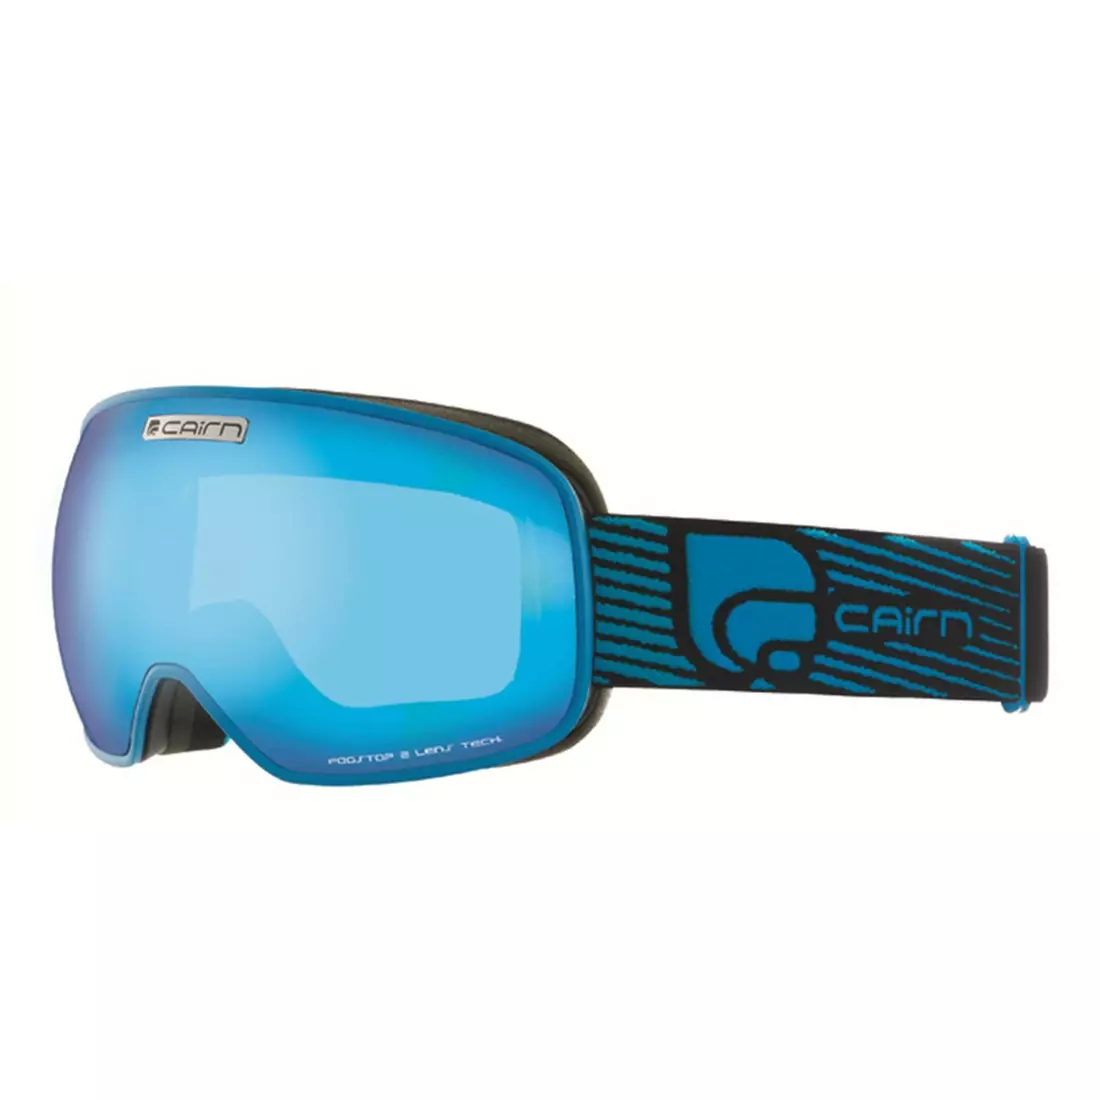 CAIRN gogle narciarskie/snowboardowe MAGNETIK IUM black/blue 5806418202